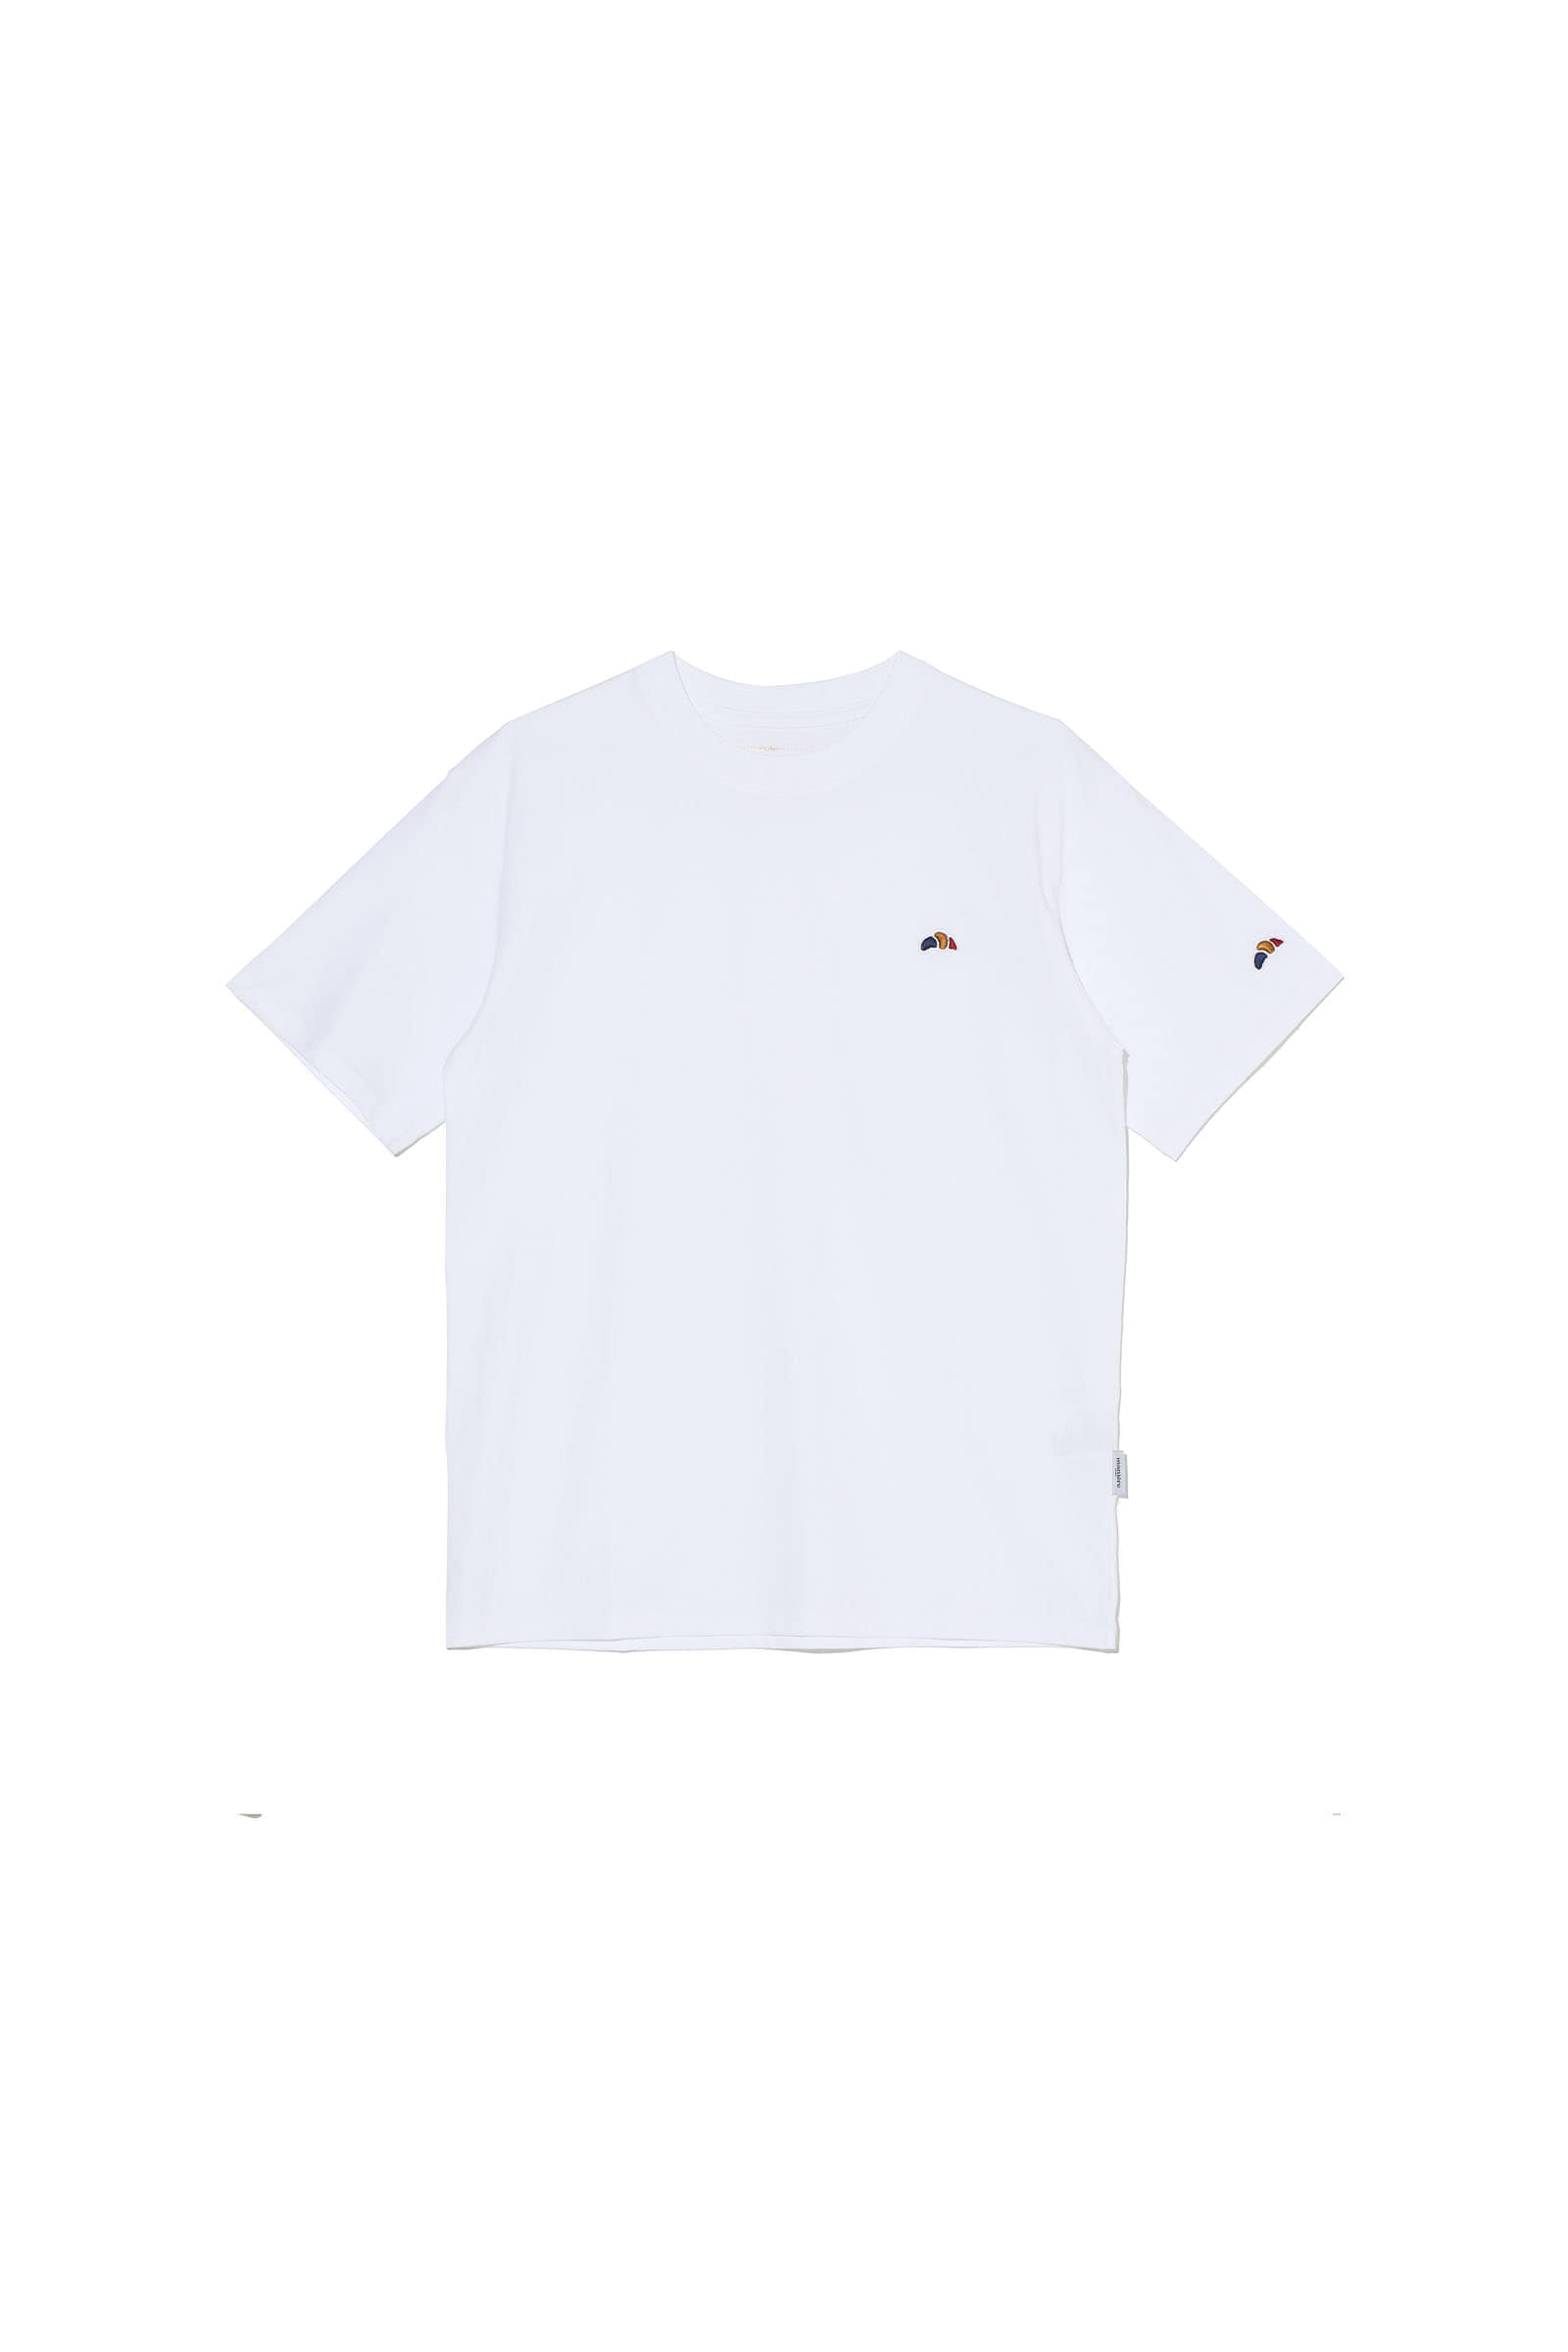 ep.6 Croissant symbol T-shirts (White)